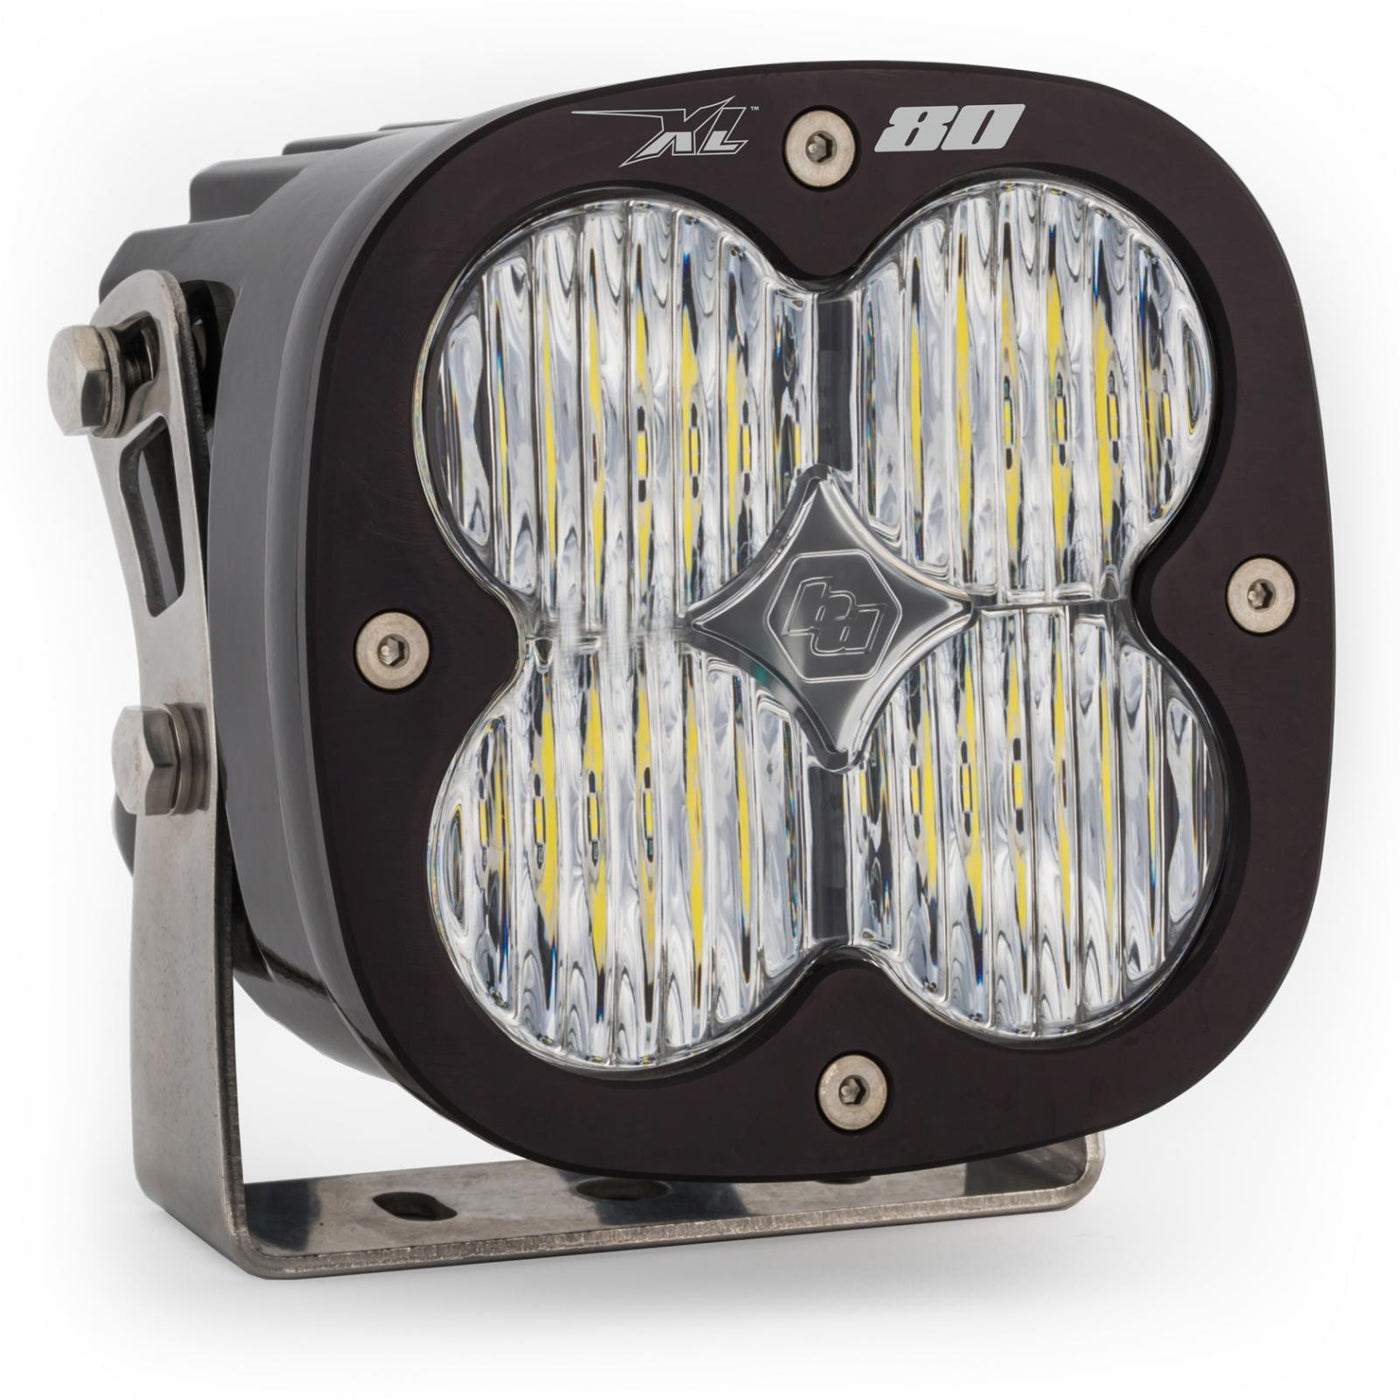 Baja Designs 670005 LED Light Pods Clear Lens Spot XL80 Wide Cornering